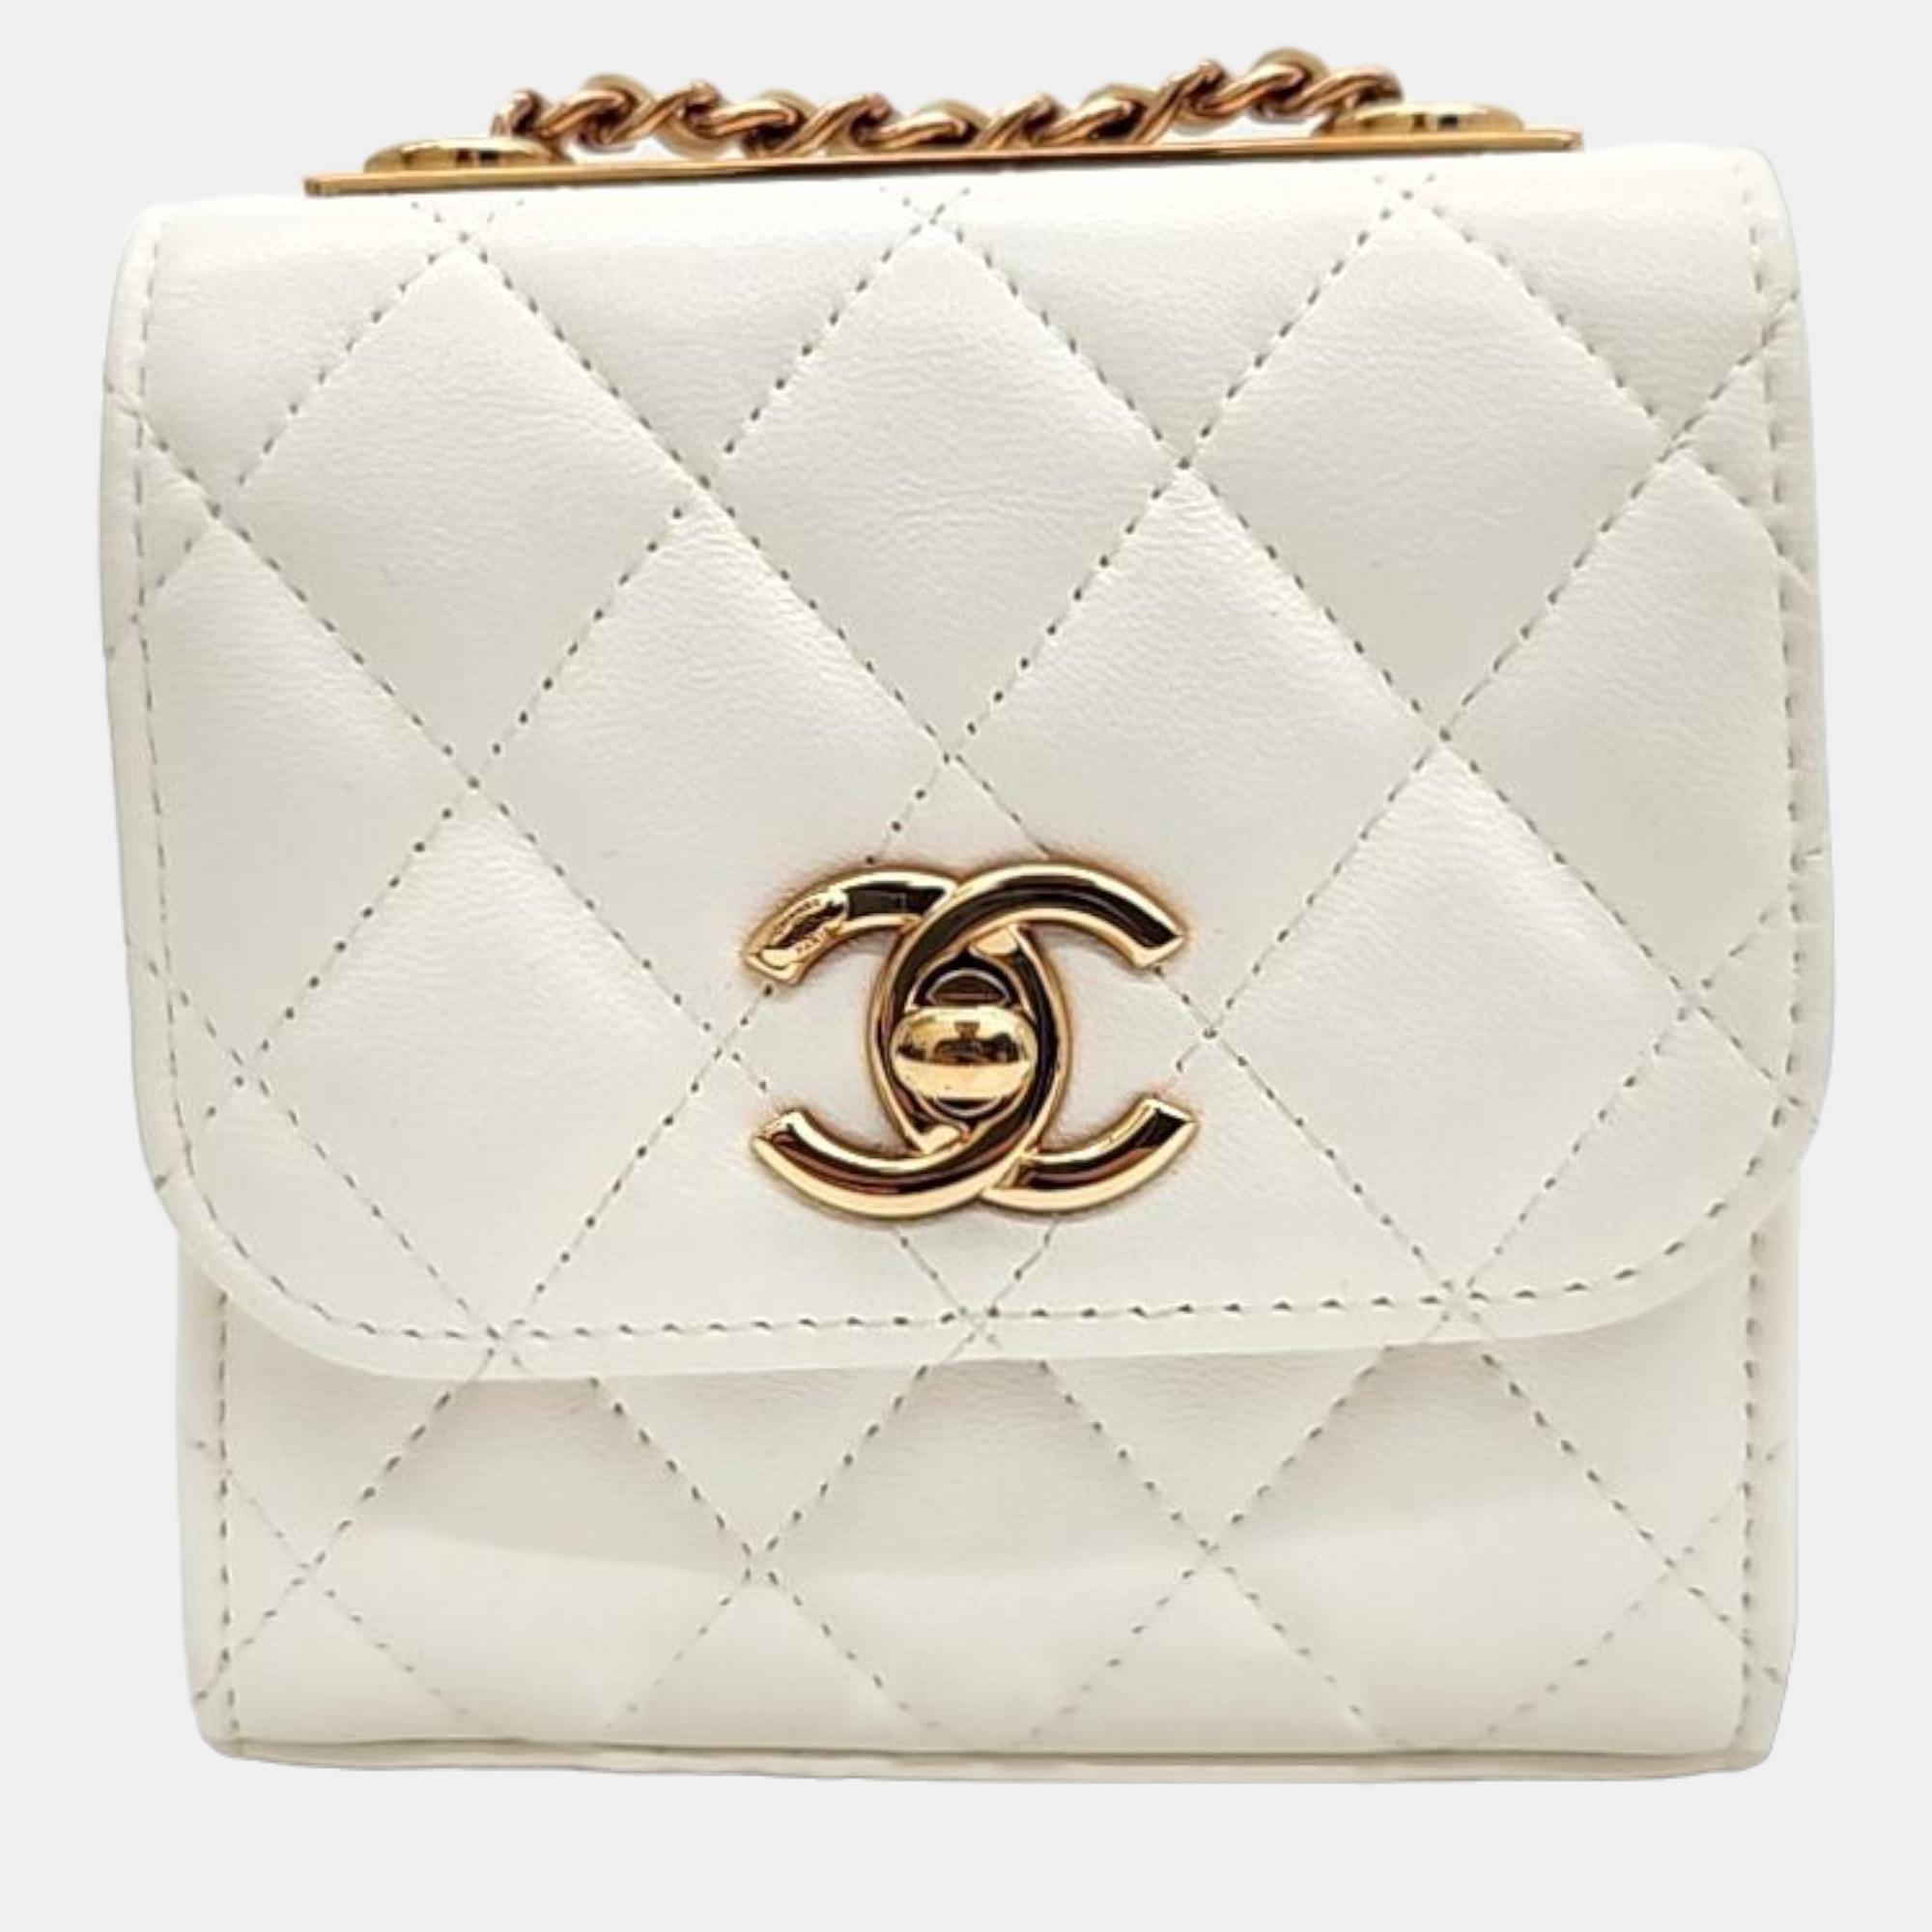 Chanel White Lambskin Leather Mini Trendy CC Clutch Bag